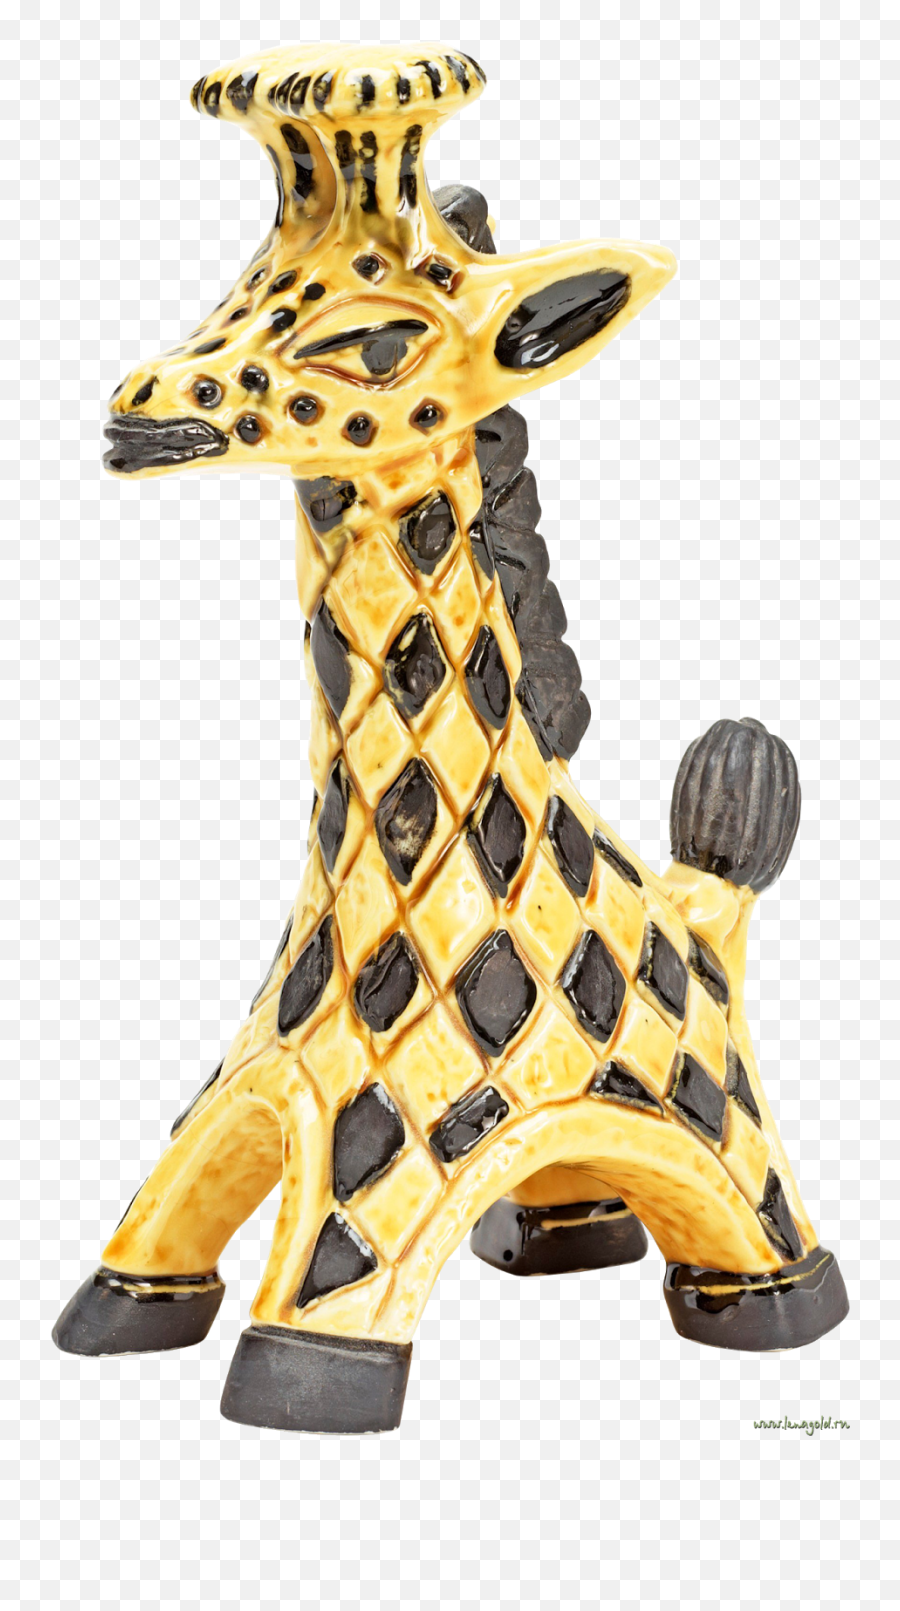 Png Images Animals Giraffe - Png Images Giraffe,Giraffe Png